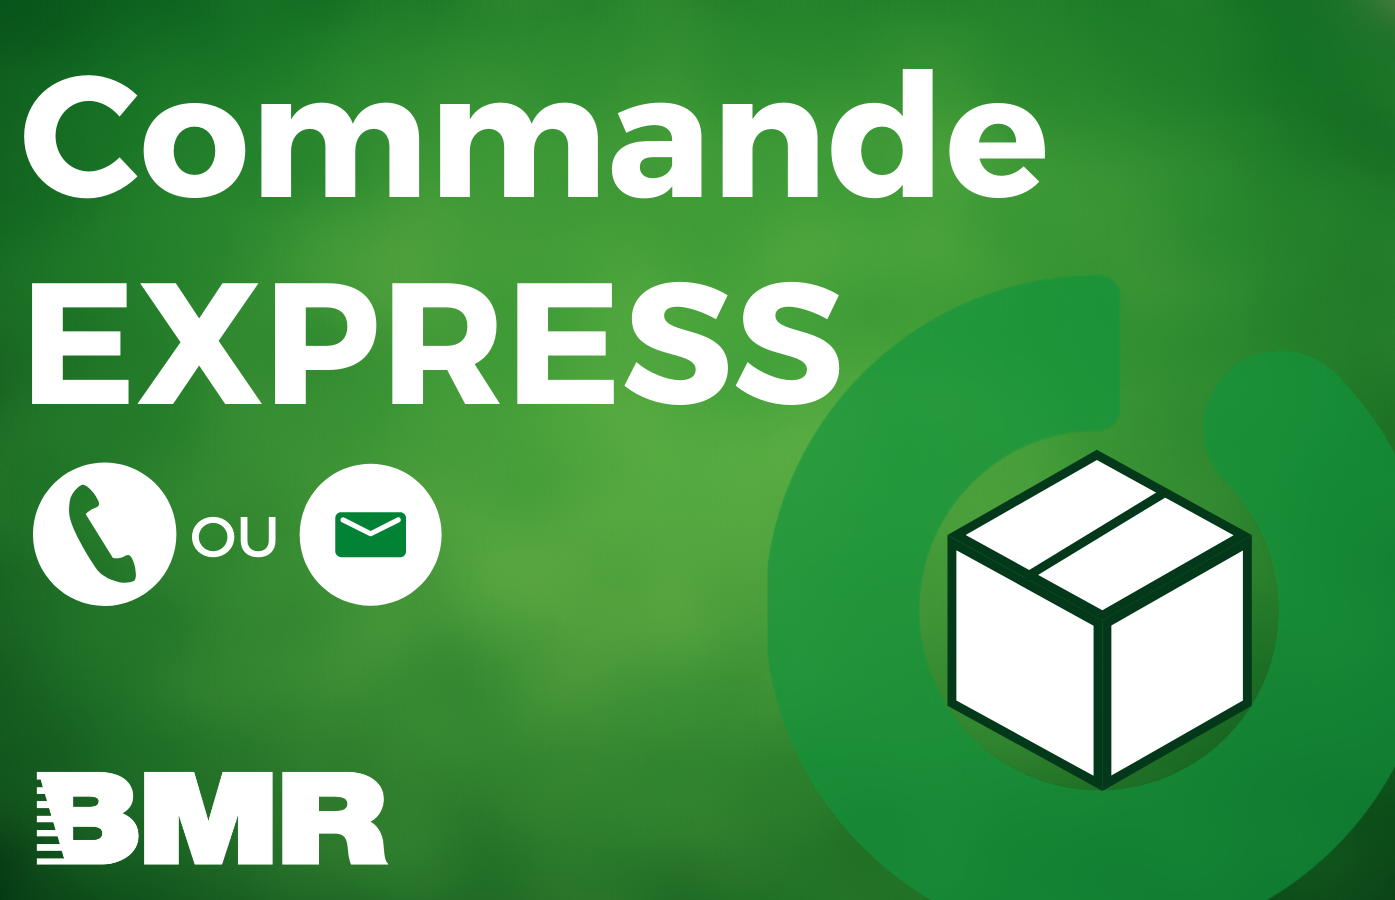 Commande Express